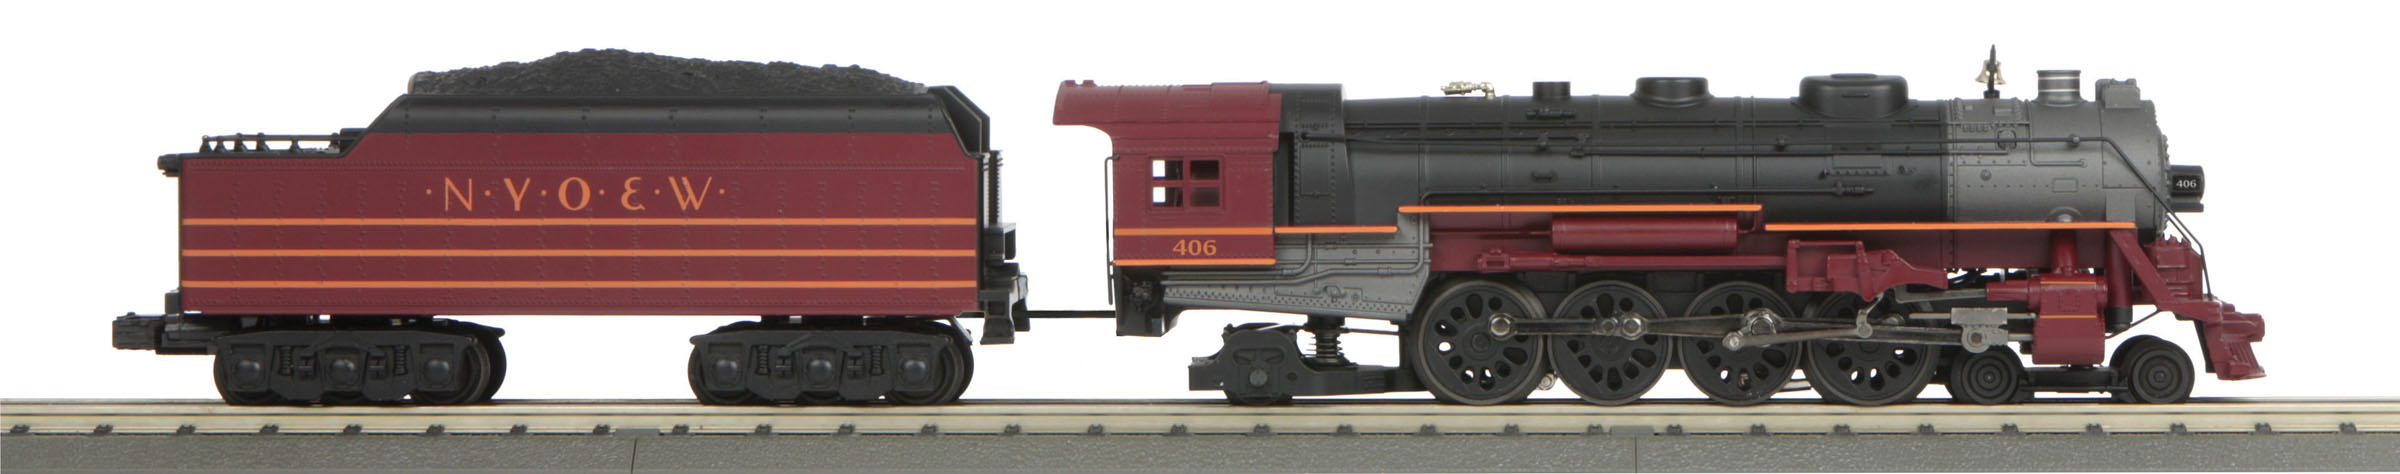 RailKing - Steam Locomotive | MTH ELECTRIC TRAINS